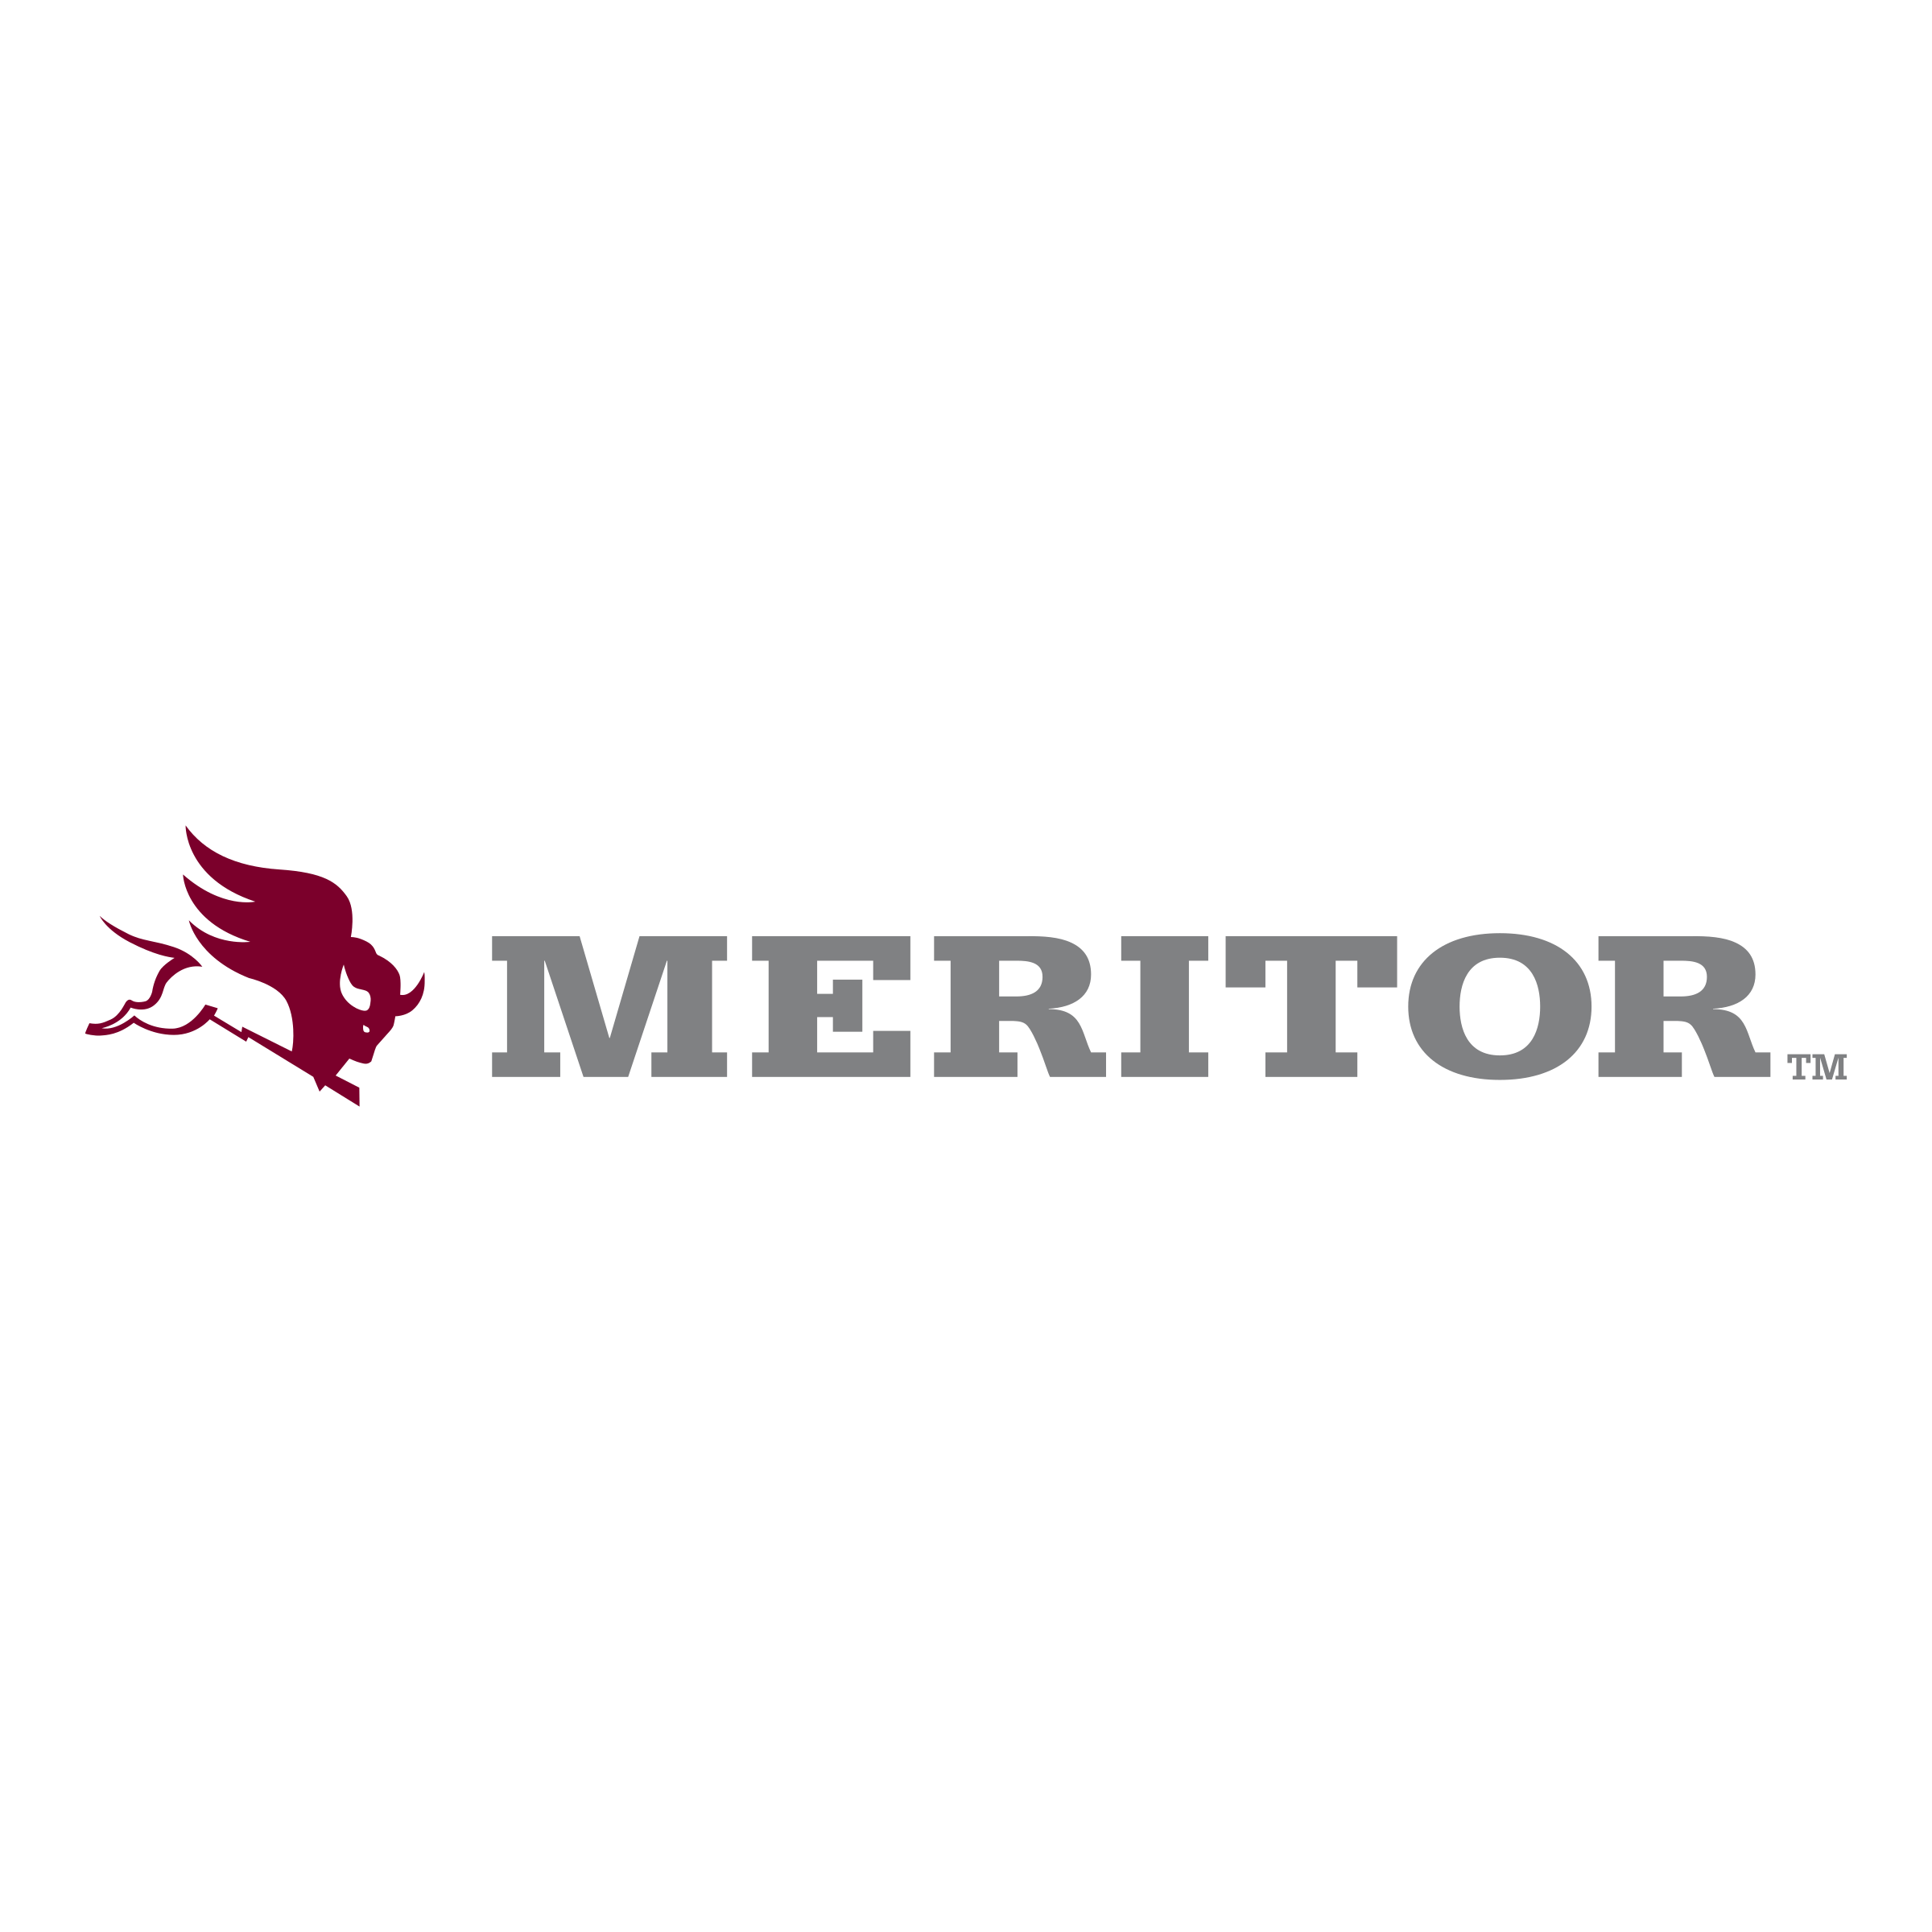 Meritor Logo - Meritor Logo PNG Transparent & SVG Vector - Freebie Supply